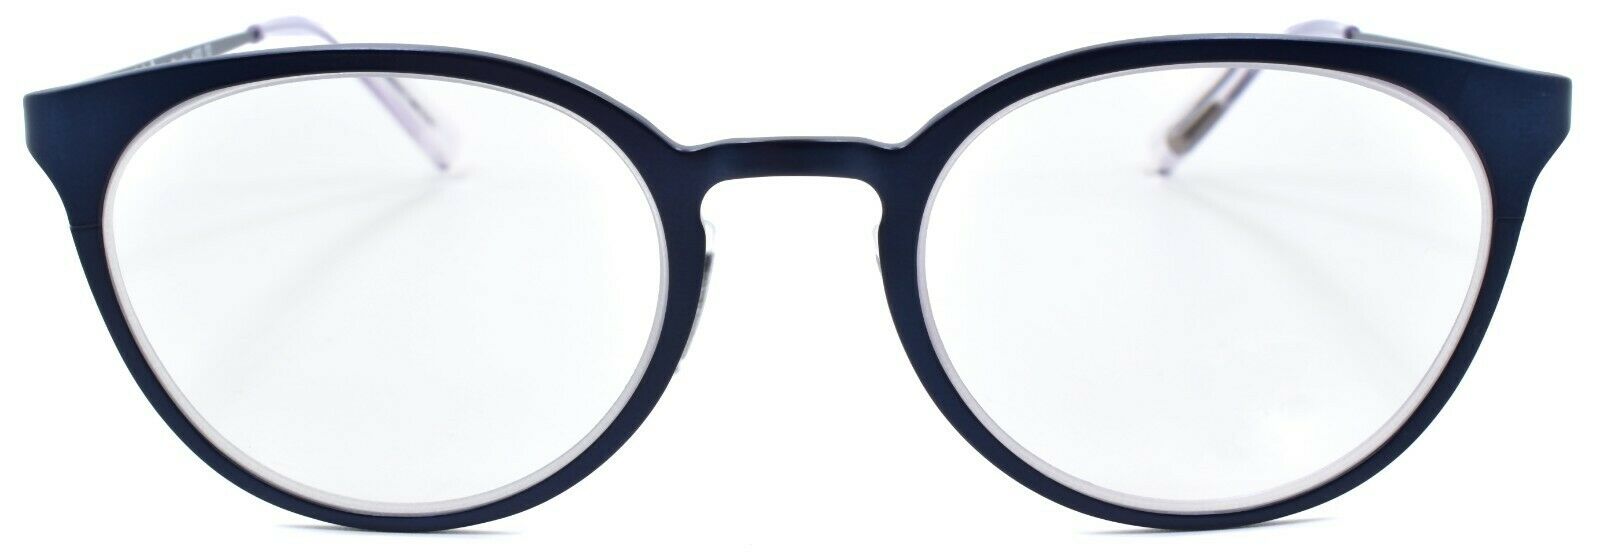 2-Eyebobs Jim Dandy 600 10 Reading Glasses Navy Blue +2.00-842754137836-IKSpecs